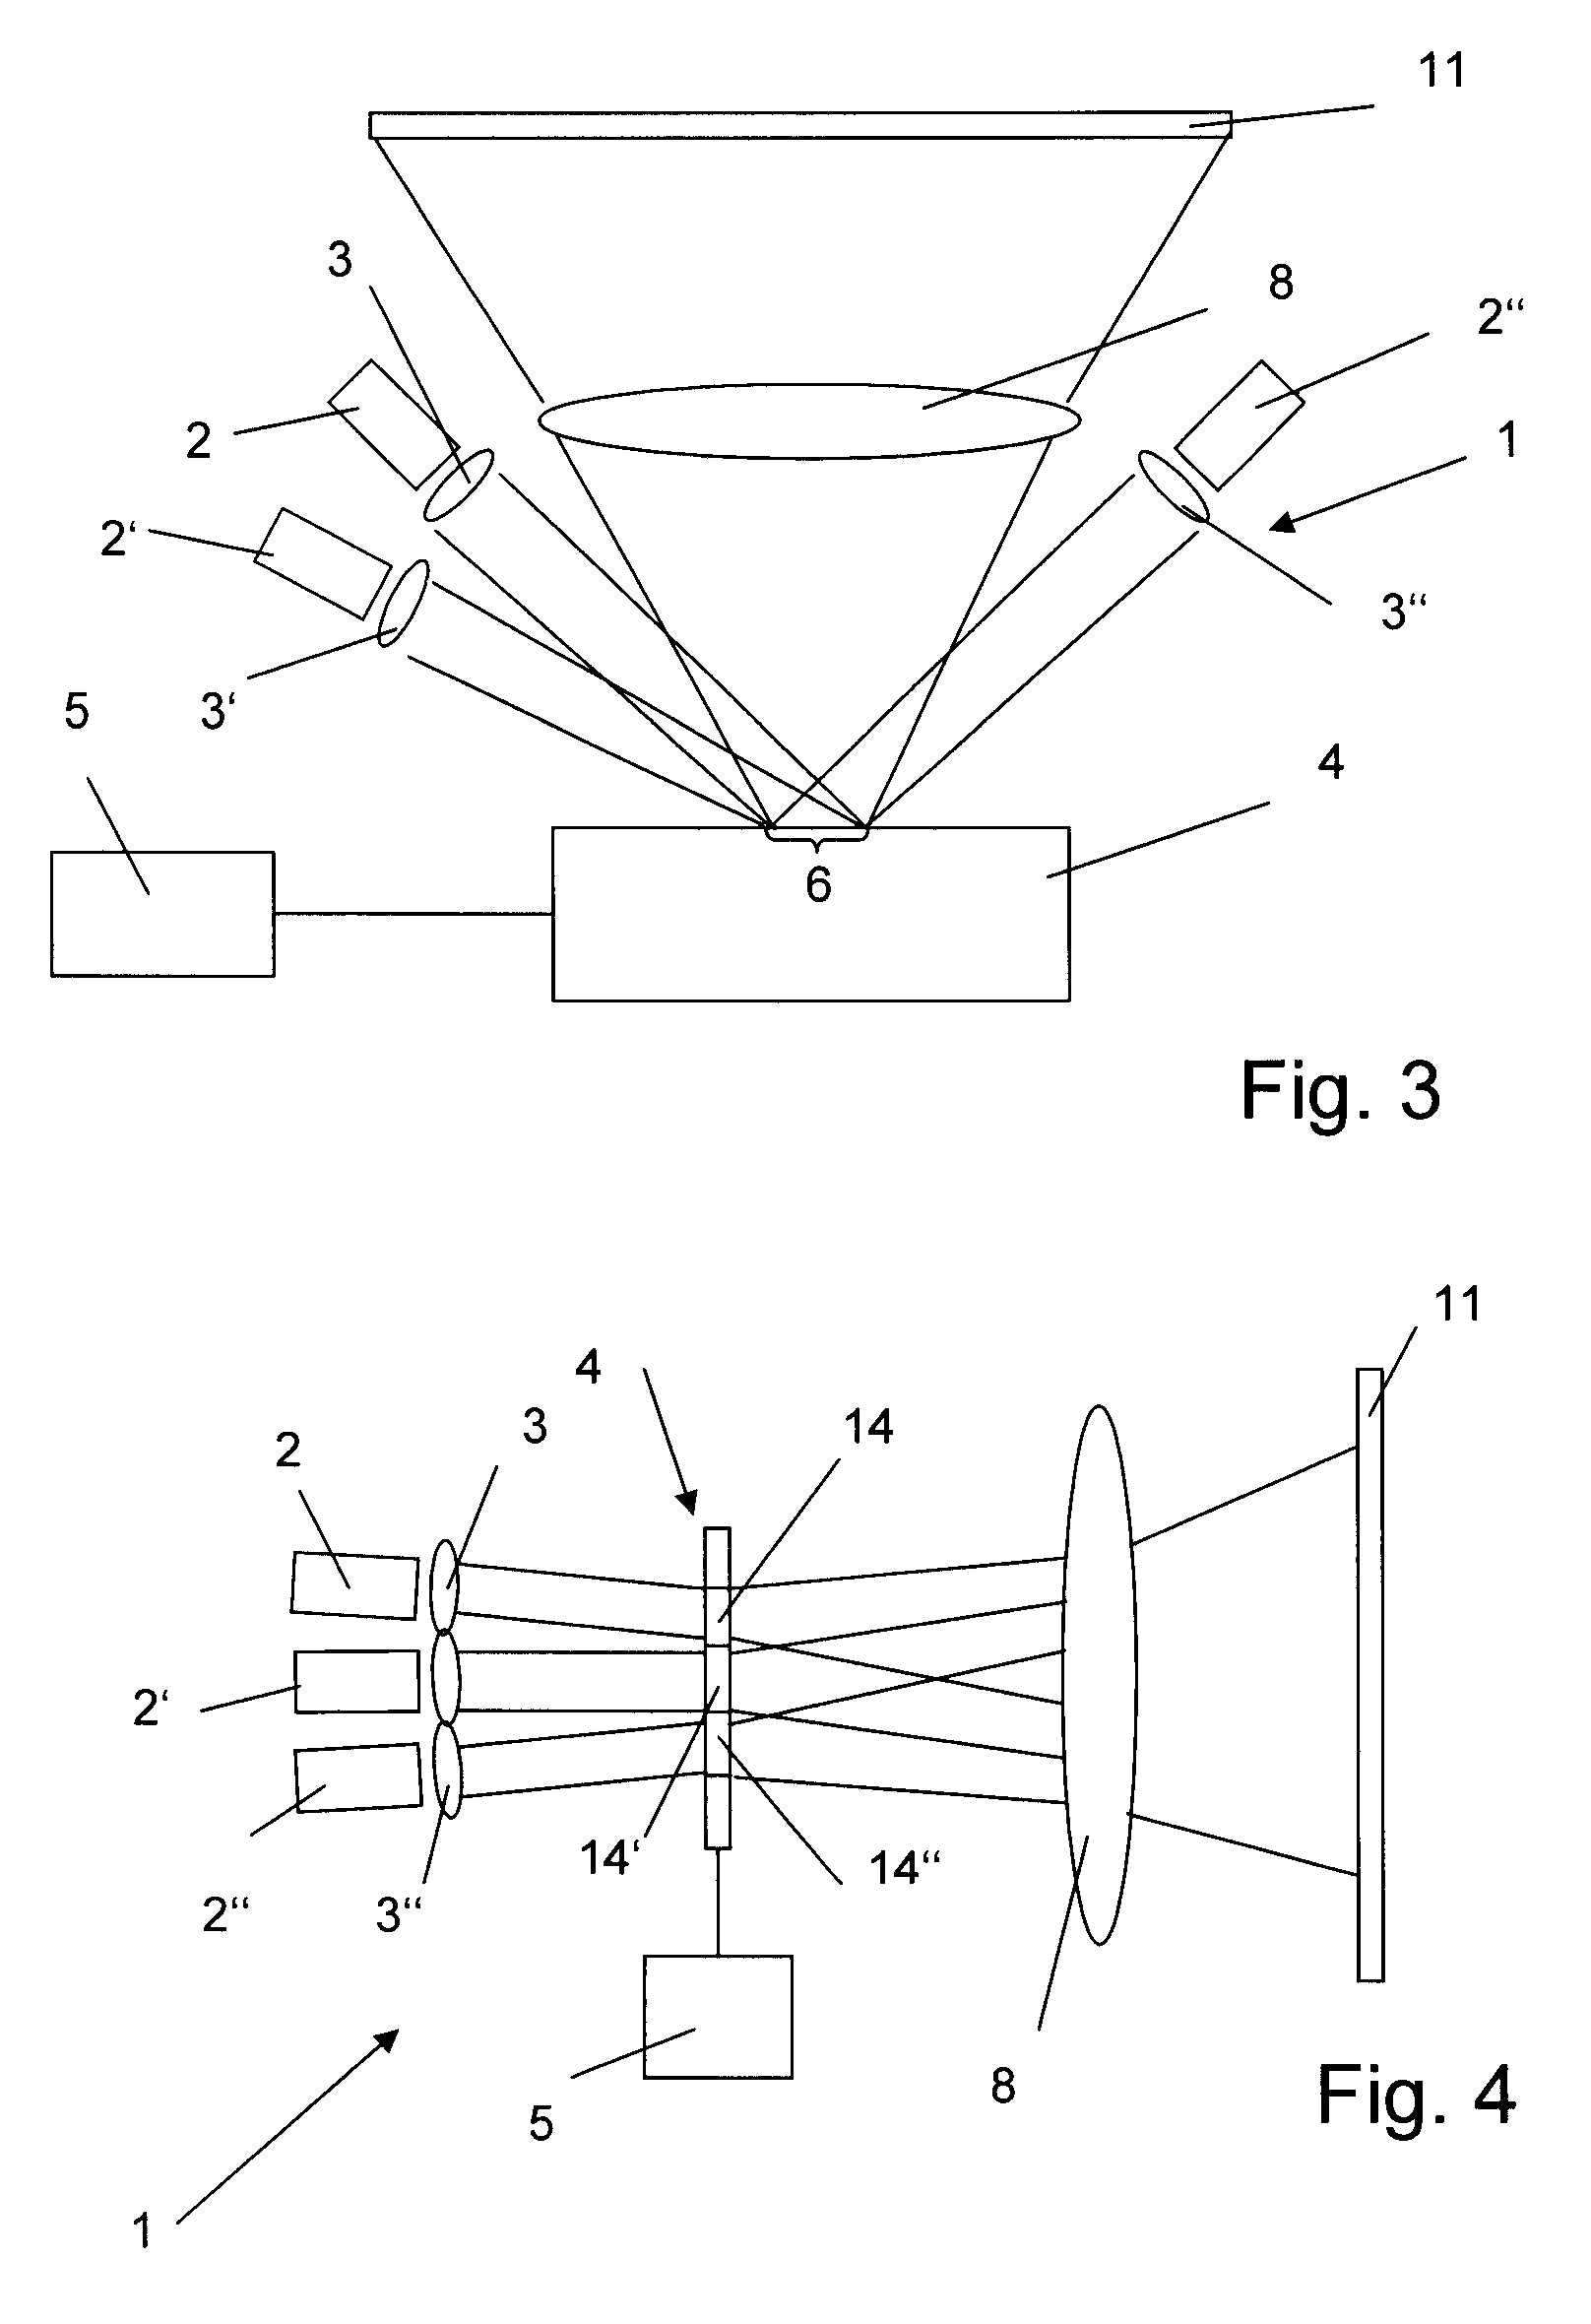 Display apparatus, method and light source